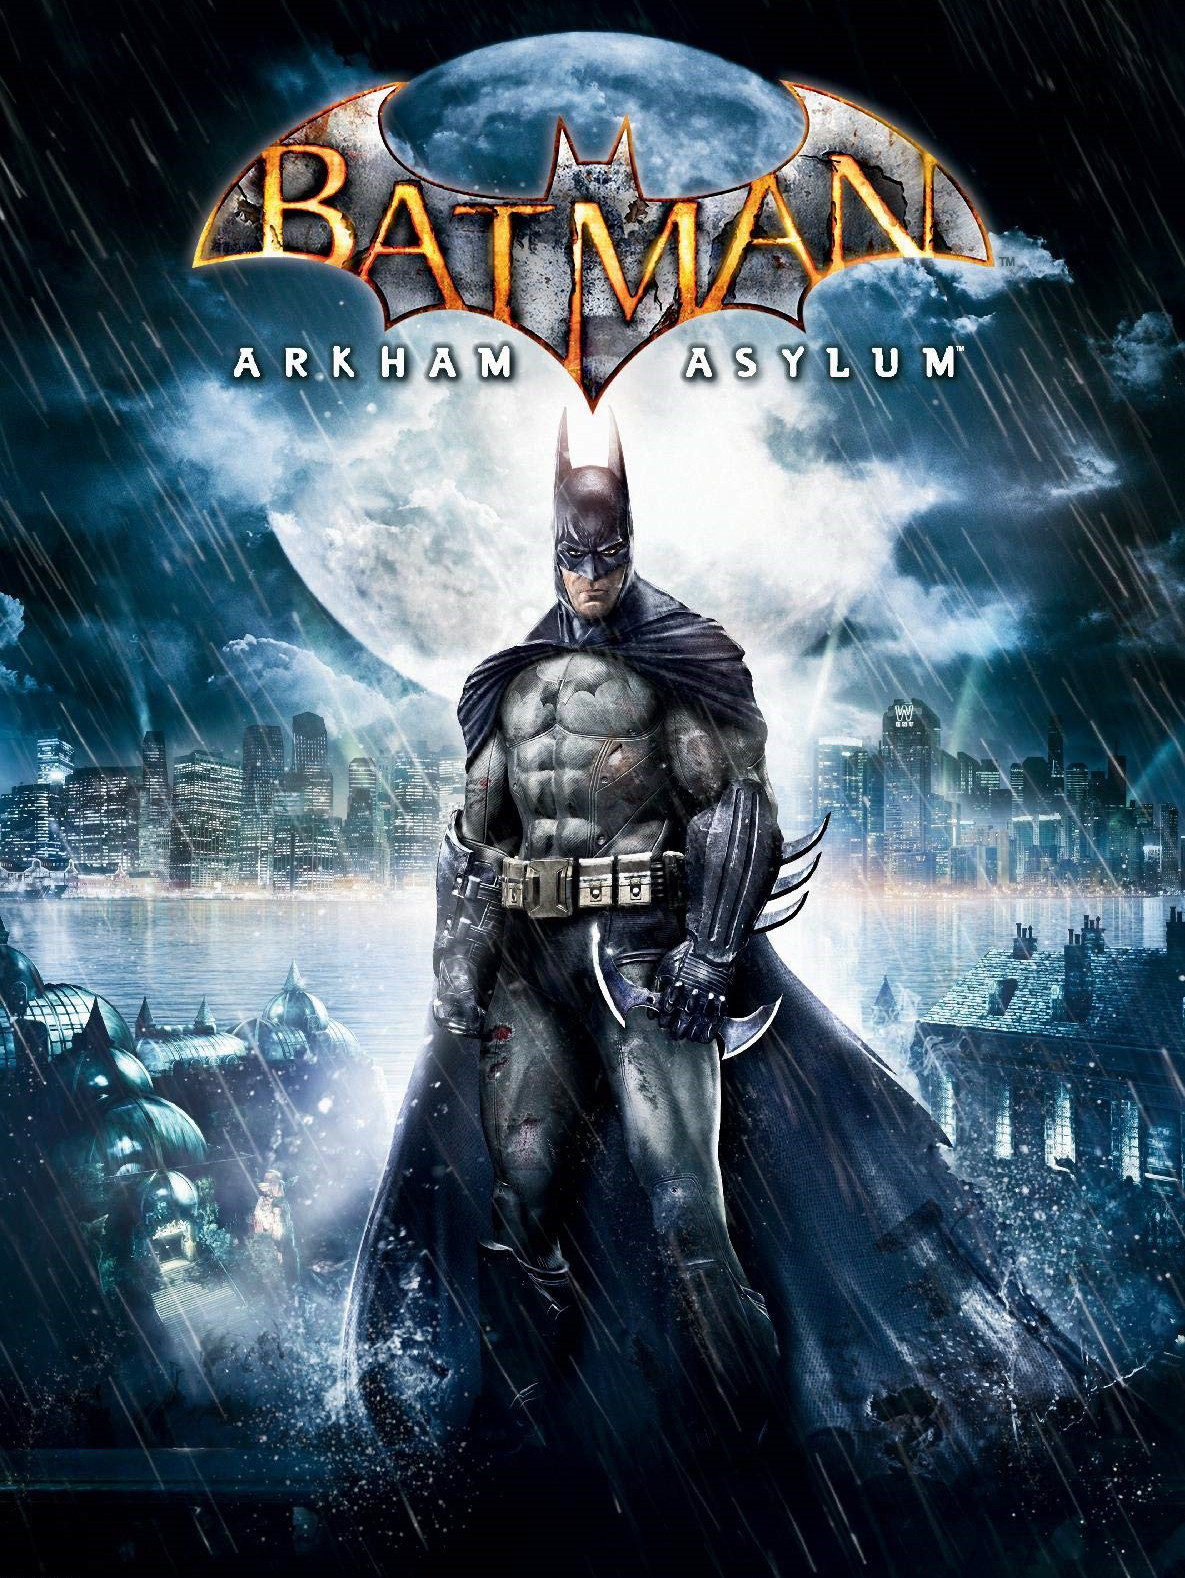 batman arkham knight update 1.14 pc download